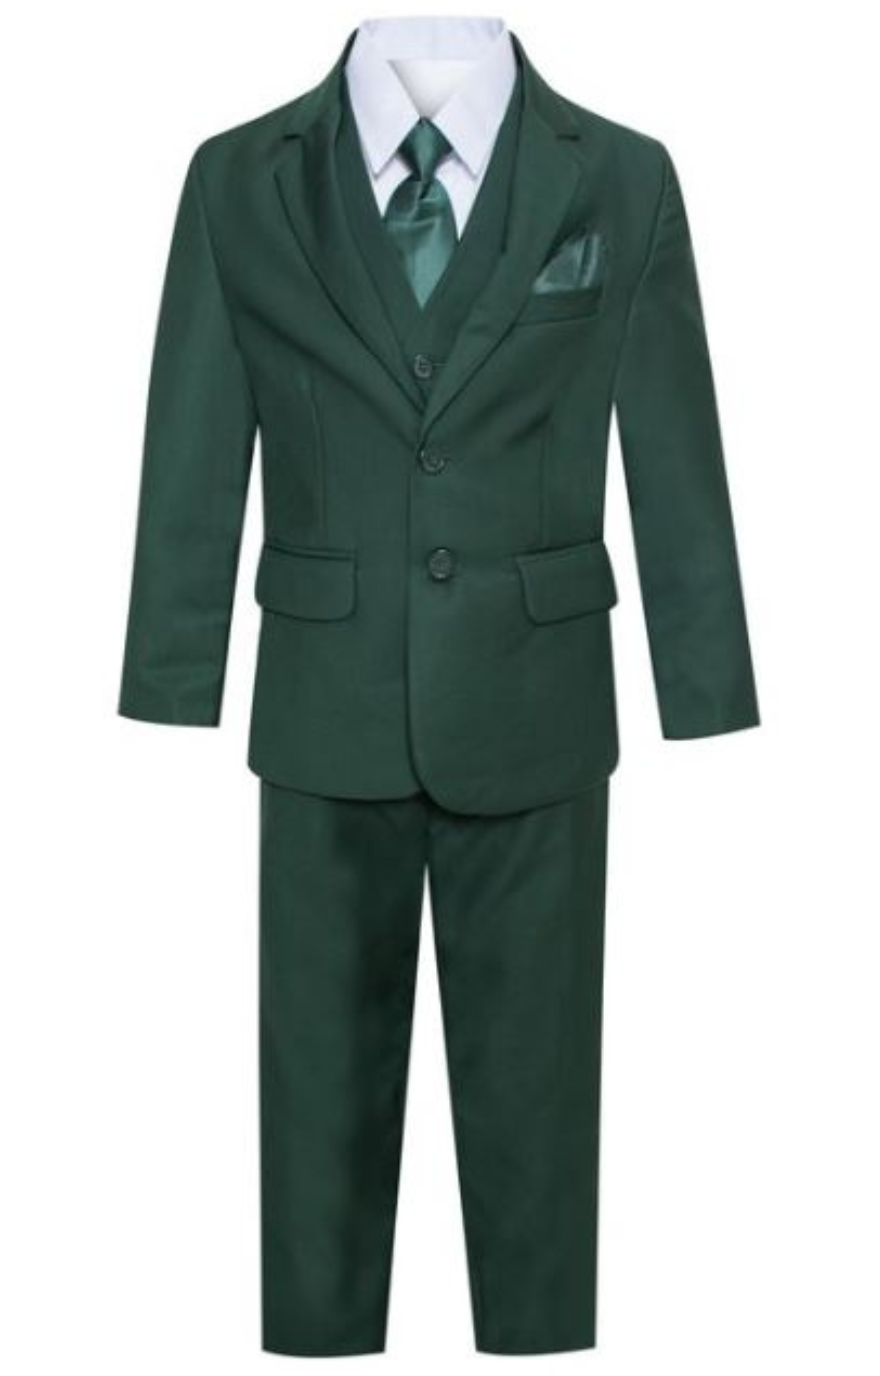 Harry 5pc Boys Suit: Hunter Green (Slim Fit)